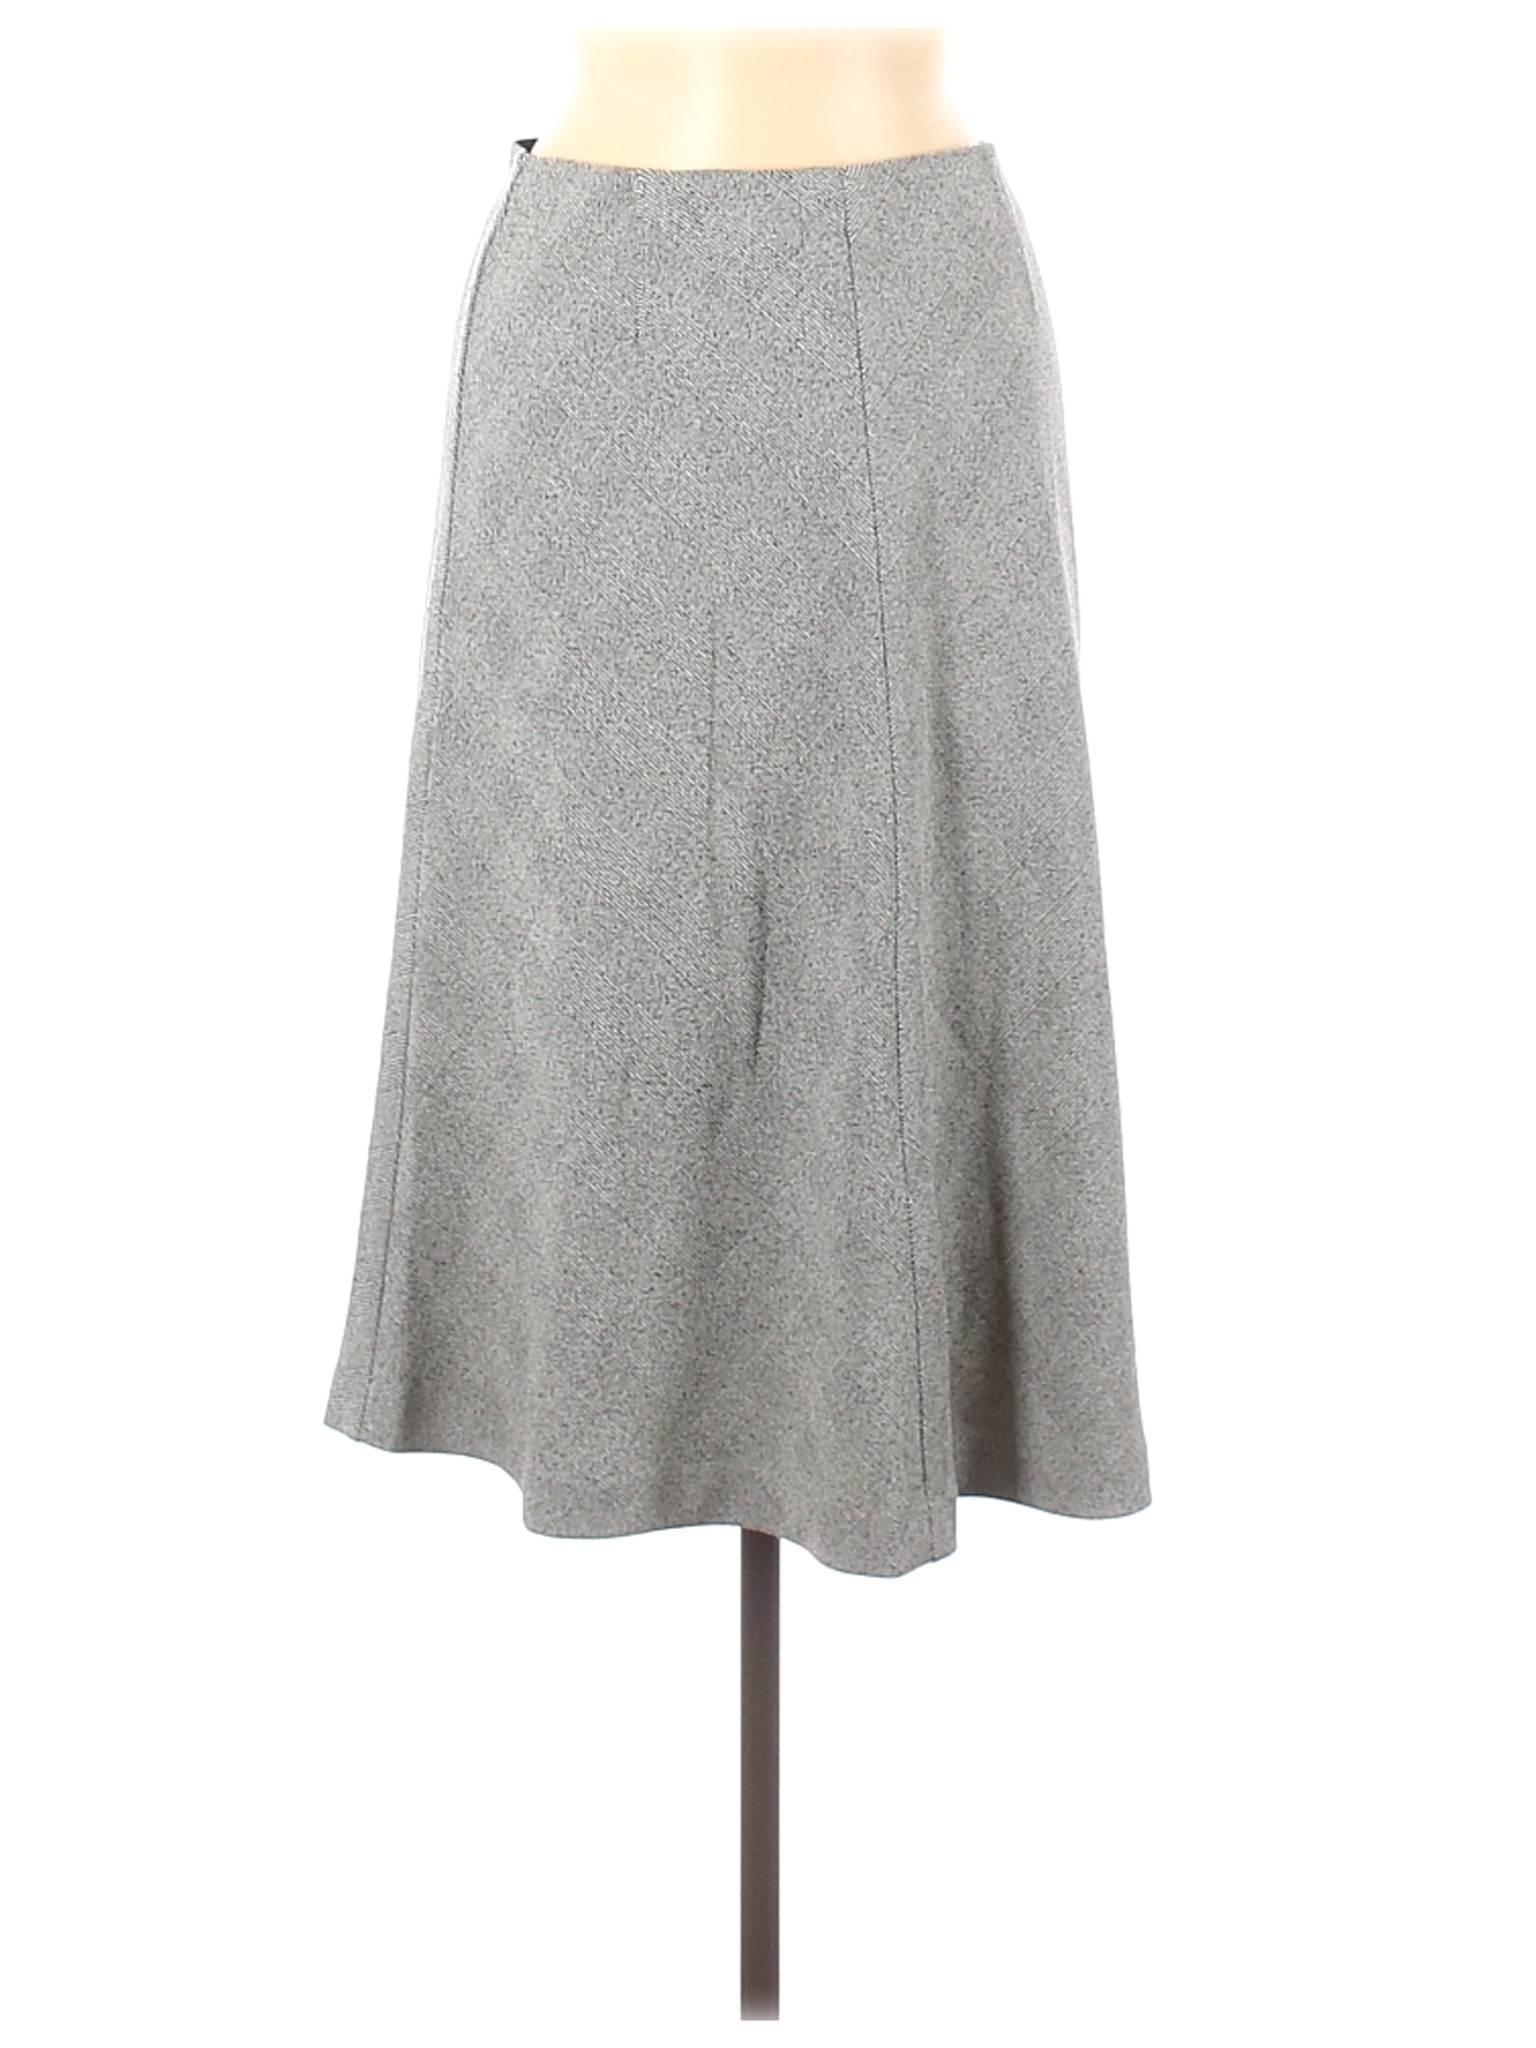 H&M Women Gray Casual Skirt 8 | eBay